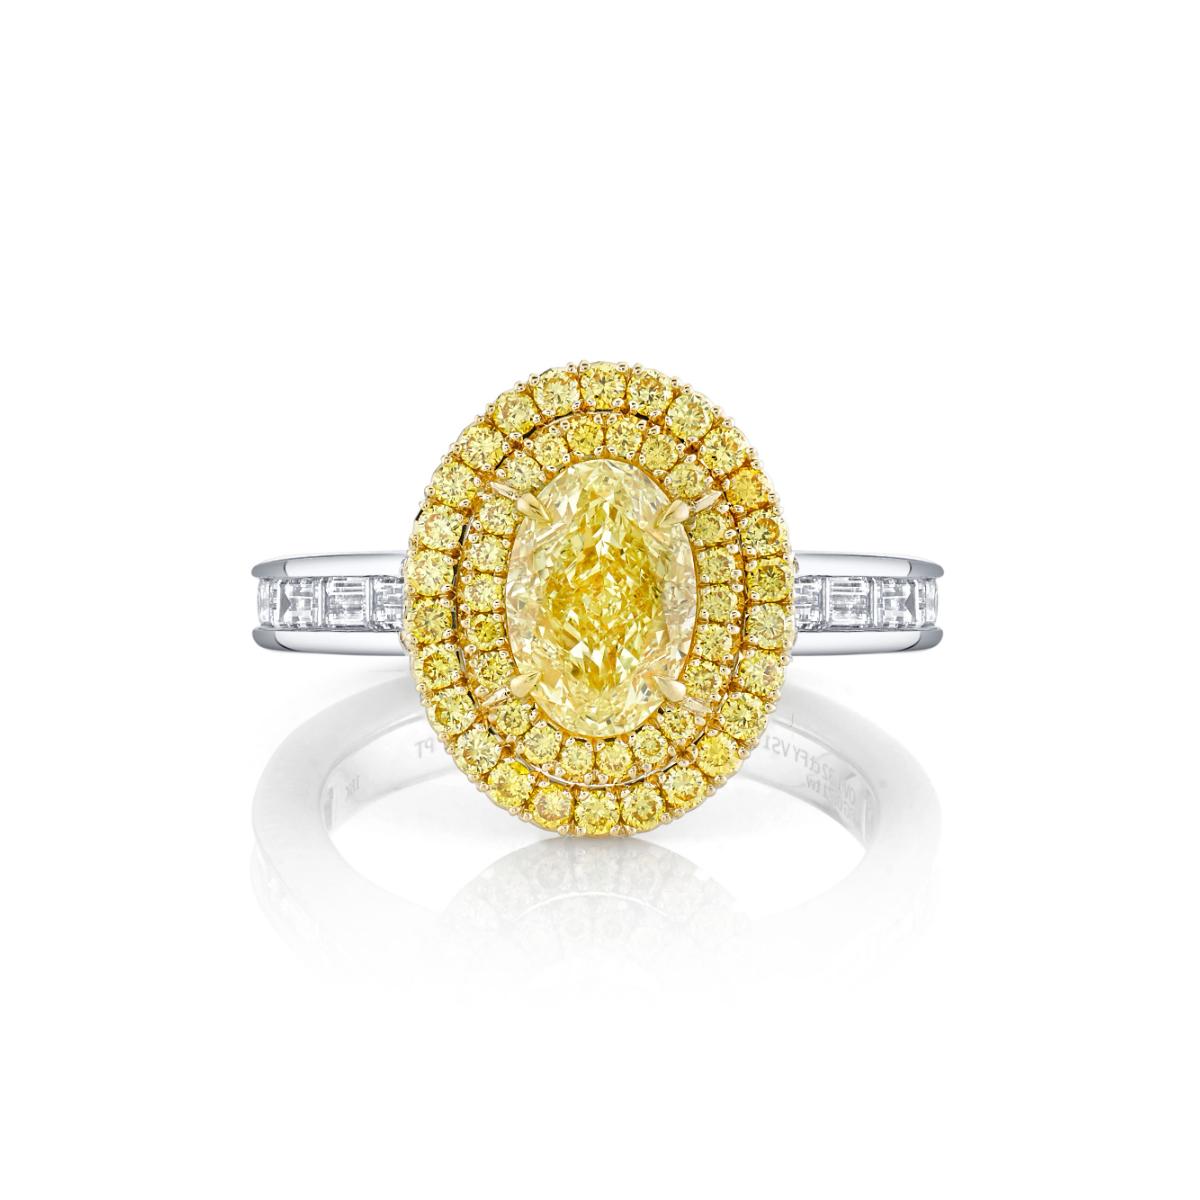 1.32 Carat Oval Yellow Diamond Ring